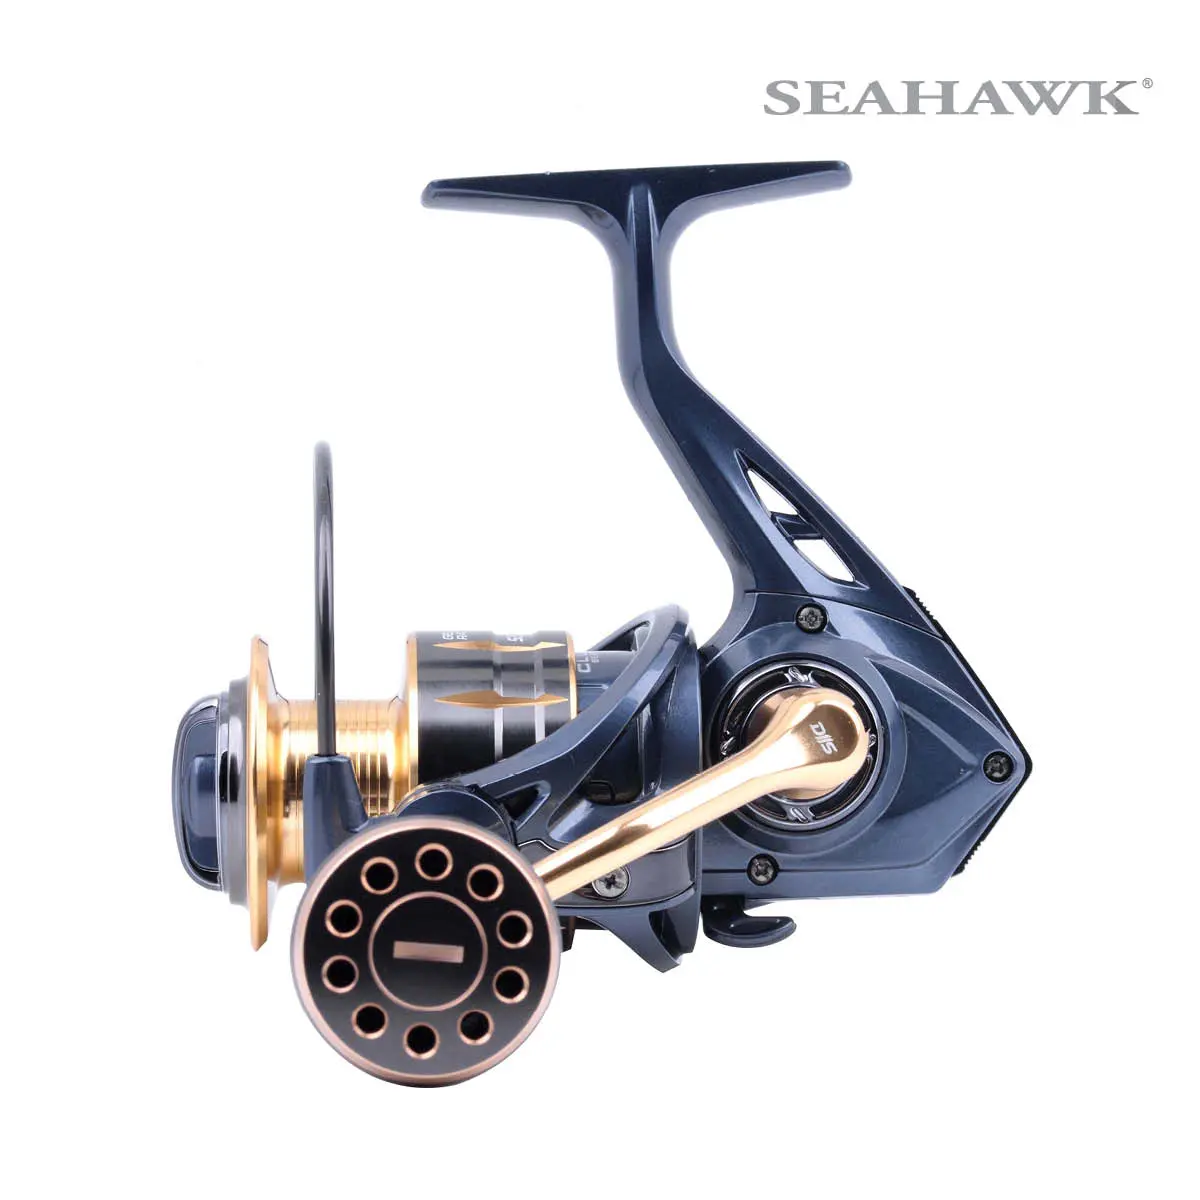 Seahawk Tarantula 2500  Strong Smooth Spinning Reel